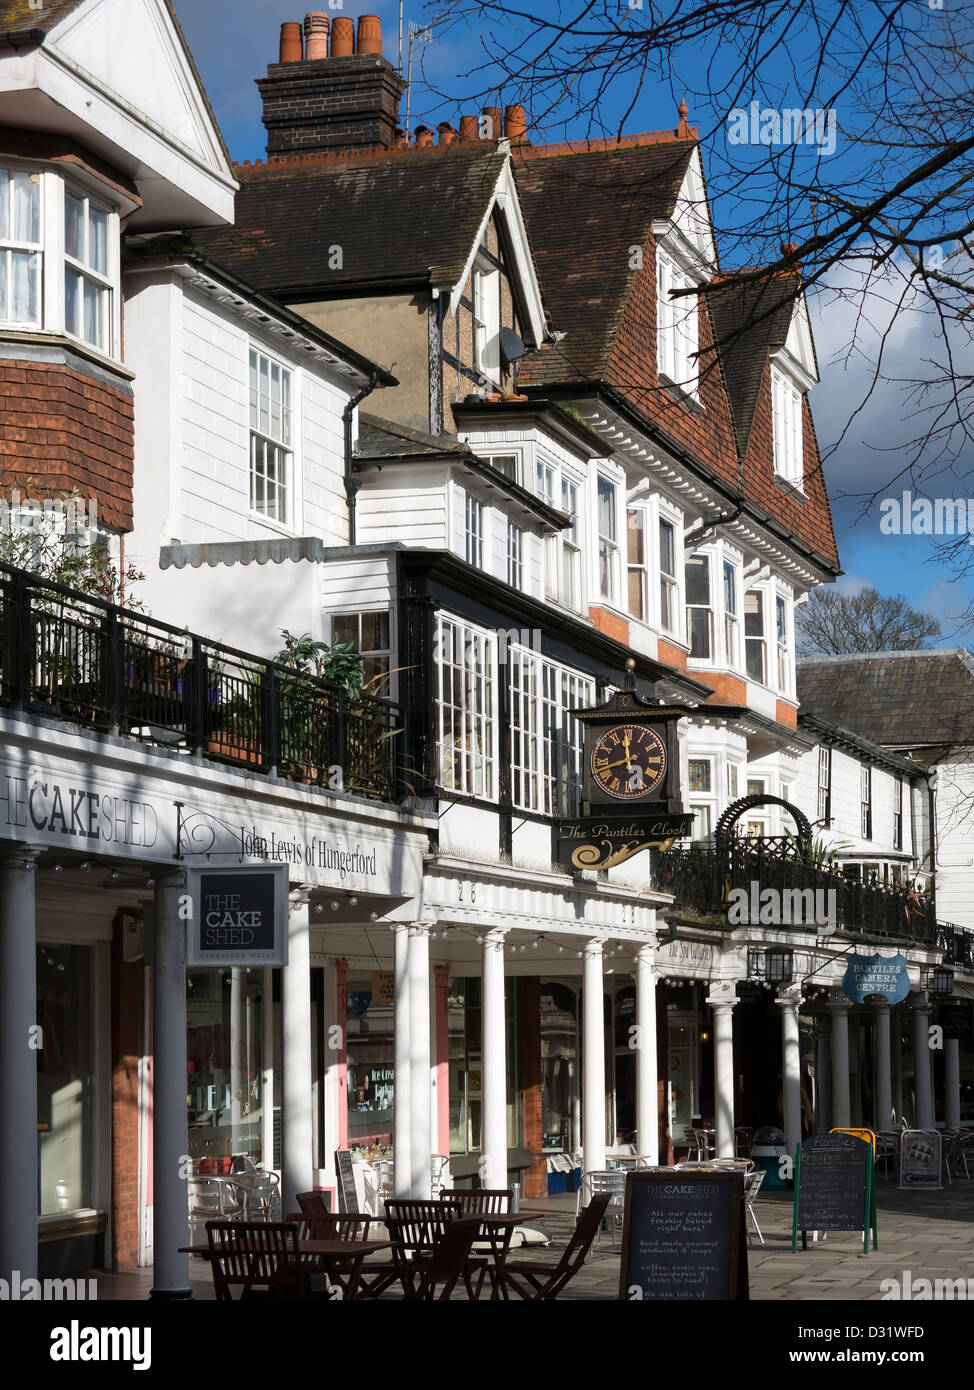 Georgian colonnade of old shop fronts, The Pantiles, Royal Tunbridge Wells, Kent, England,UK Stock Photo